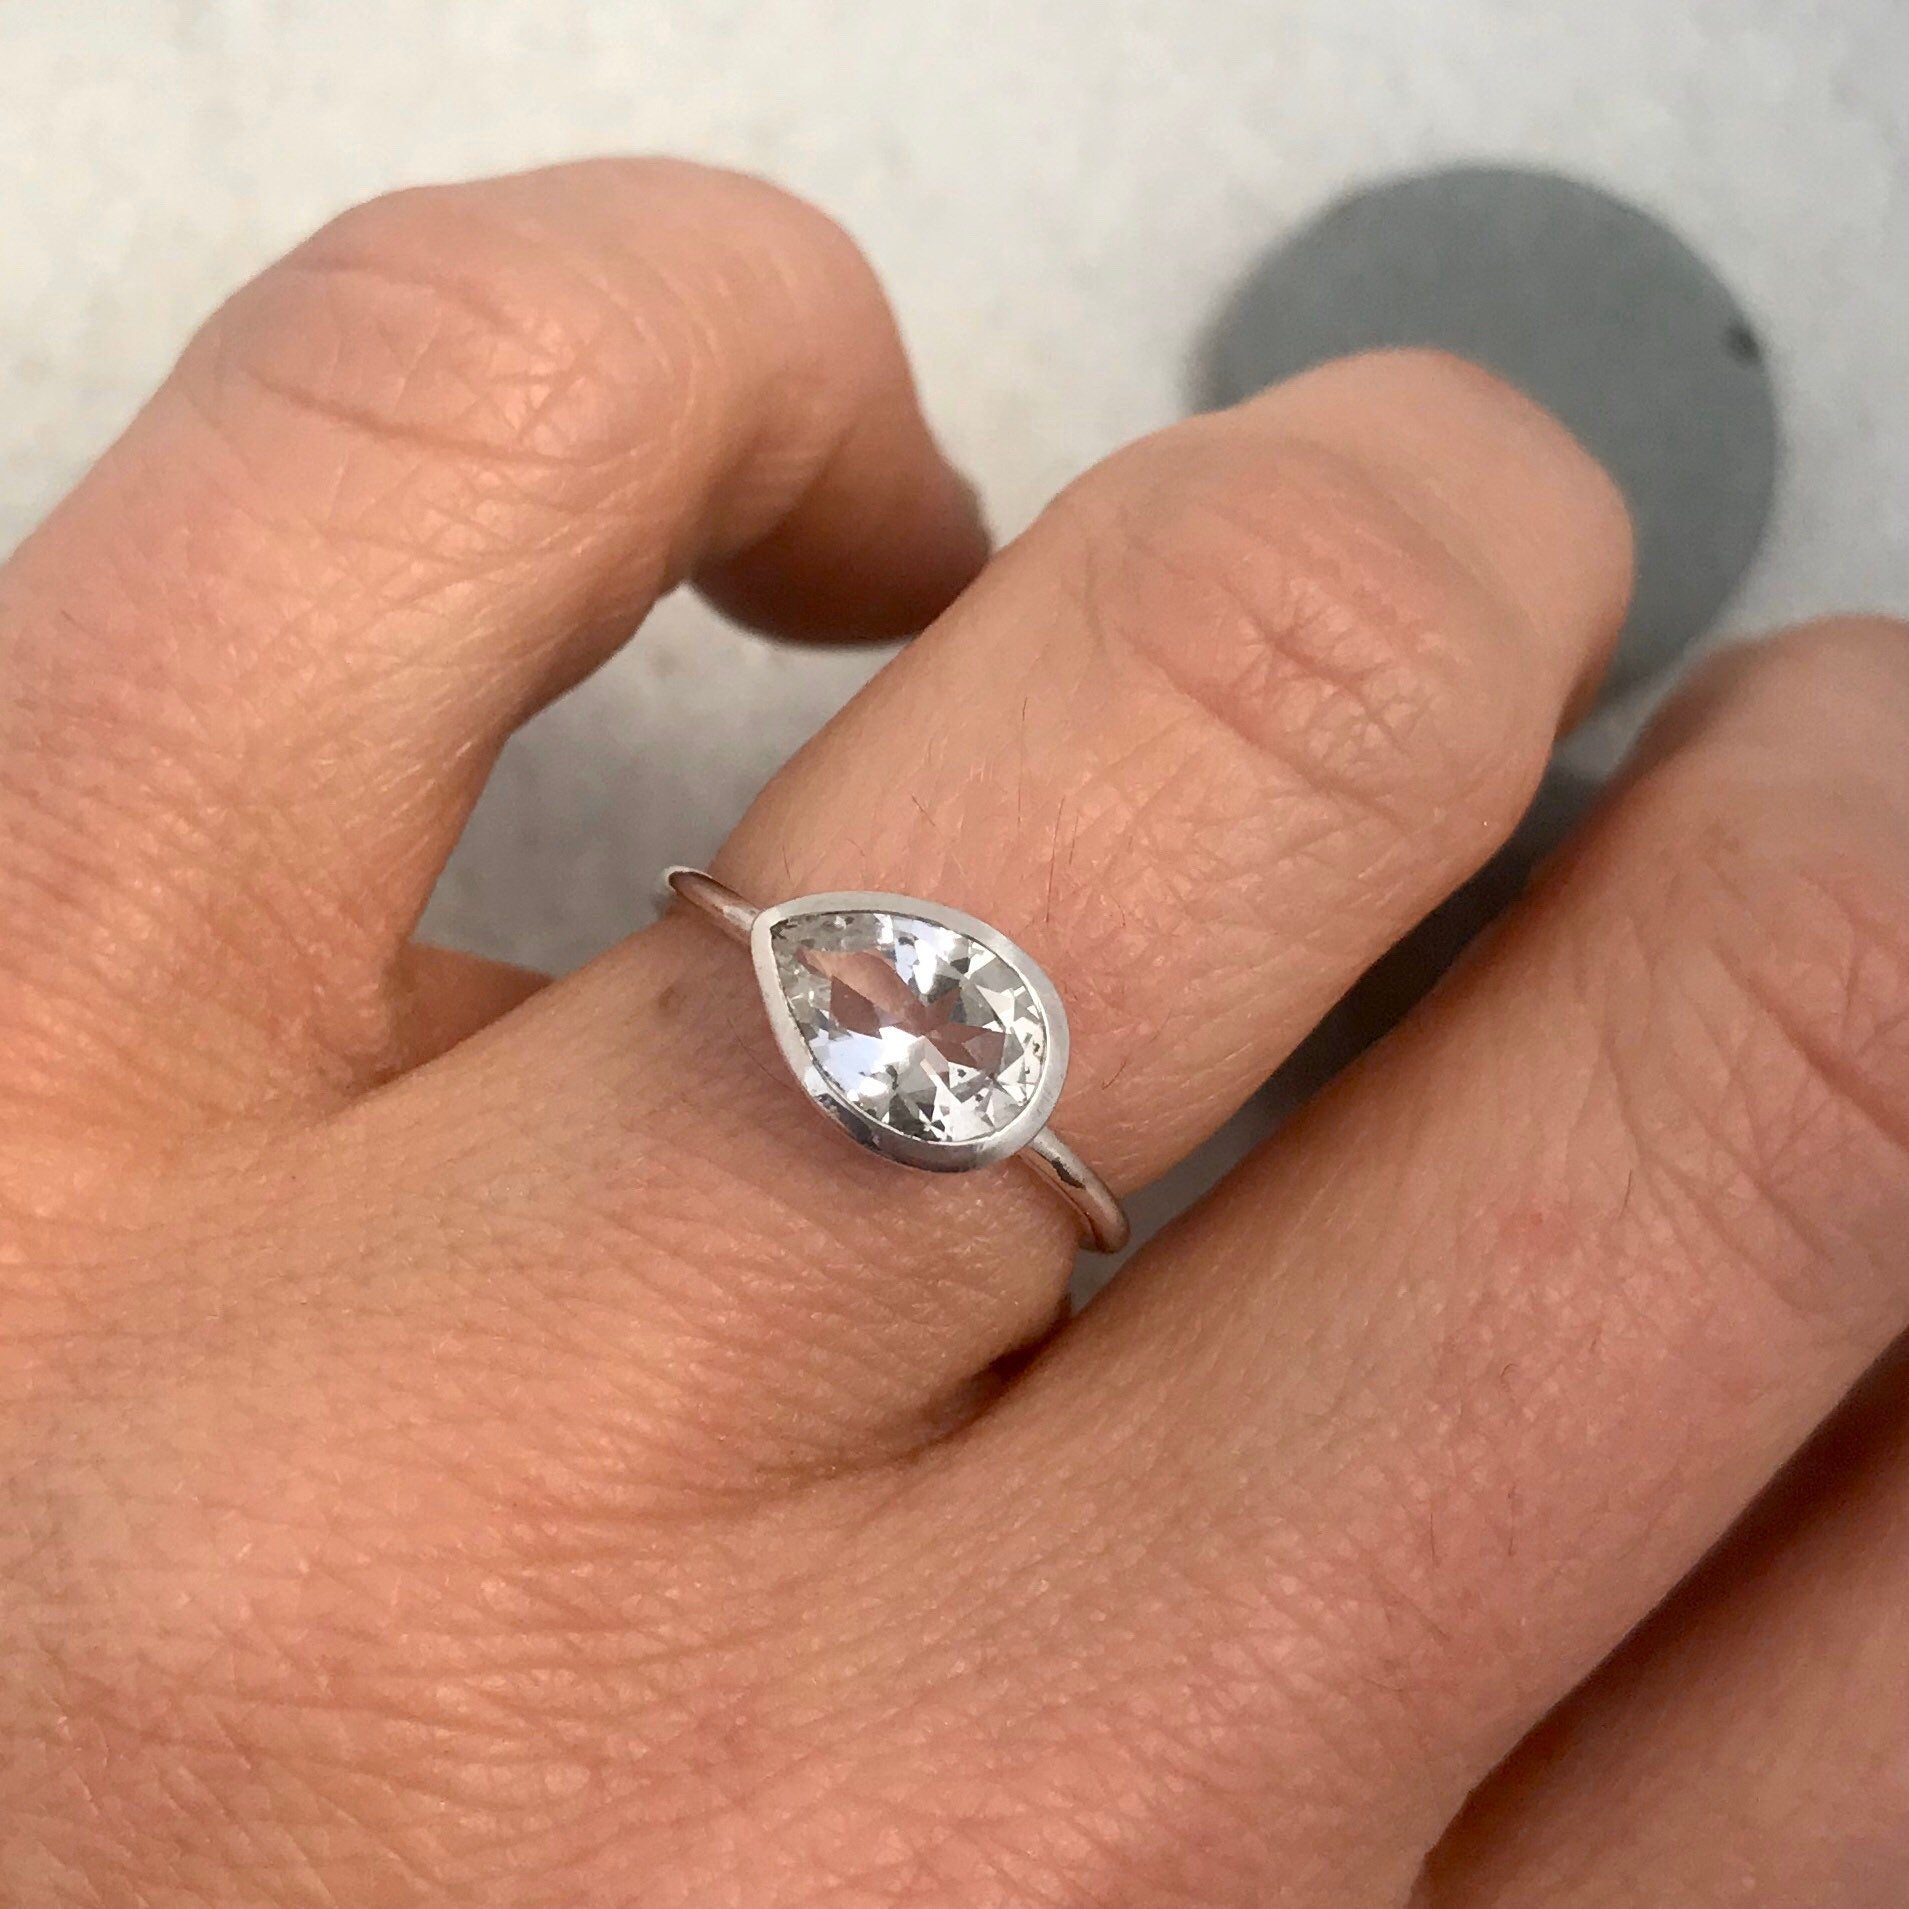 A woman's hand holding a Sideways White Topaz Pear Shape Gemstone Ring, handmade jewelry in Sterling Silver Bezel.